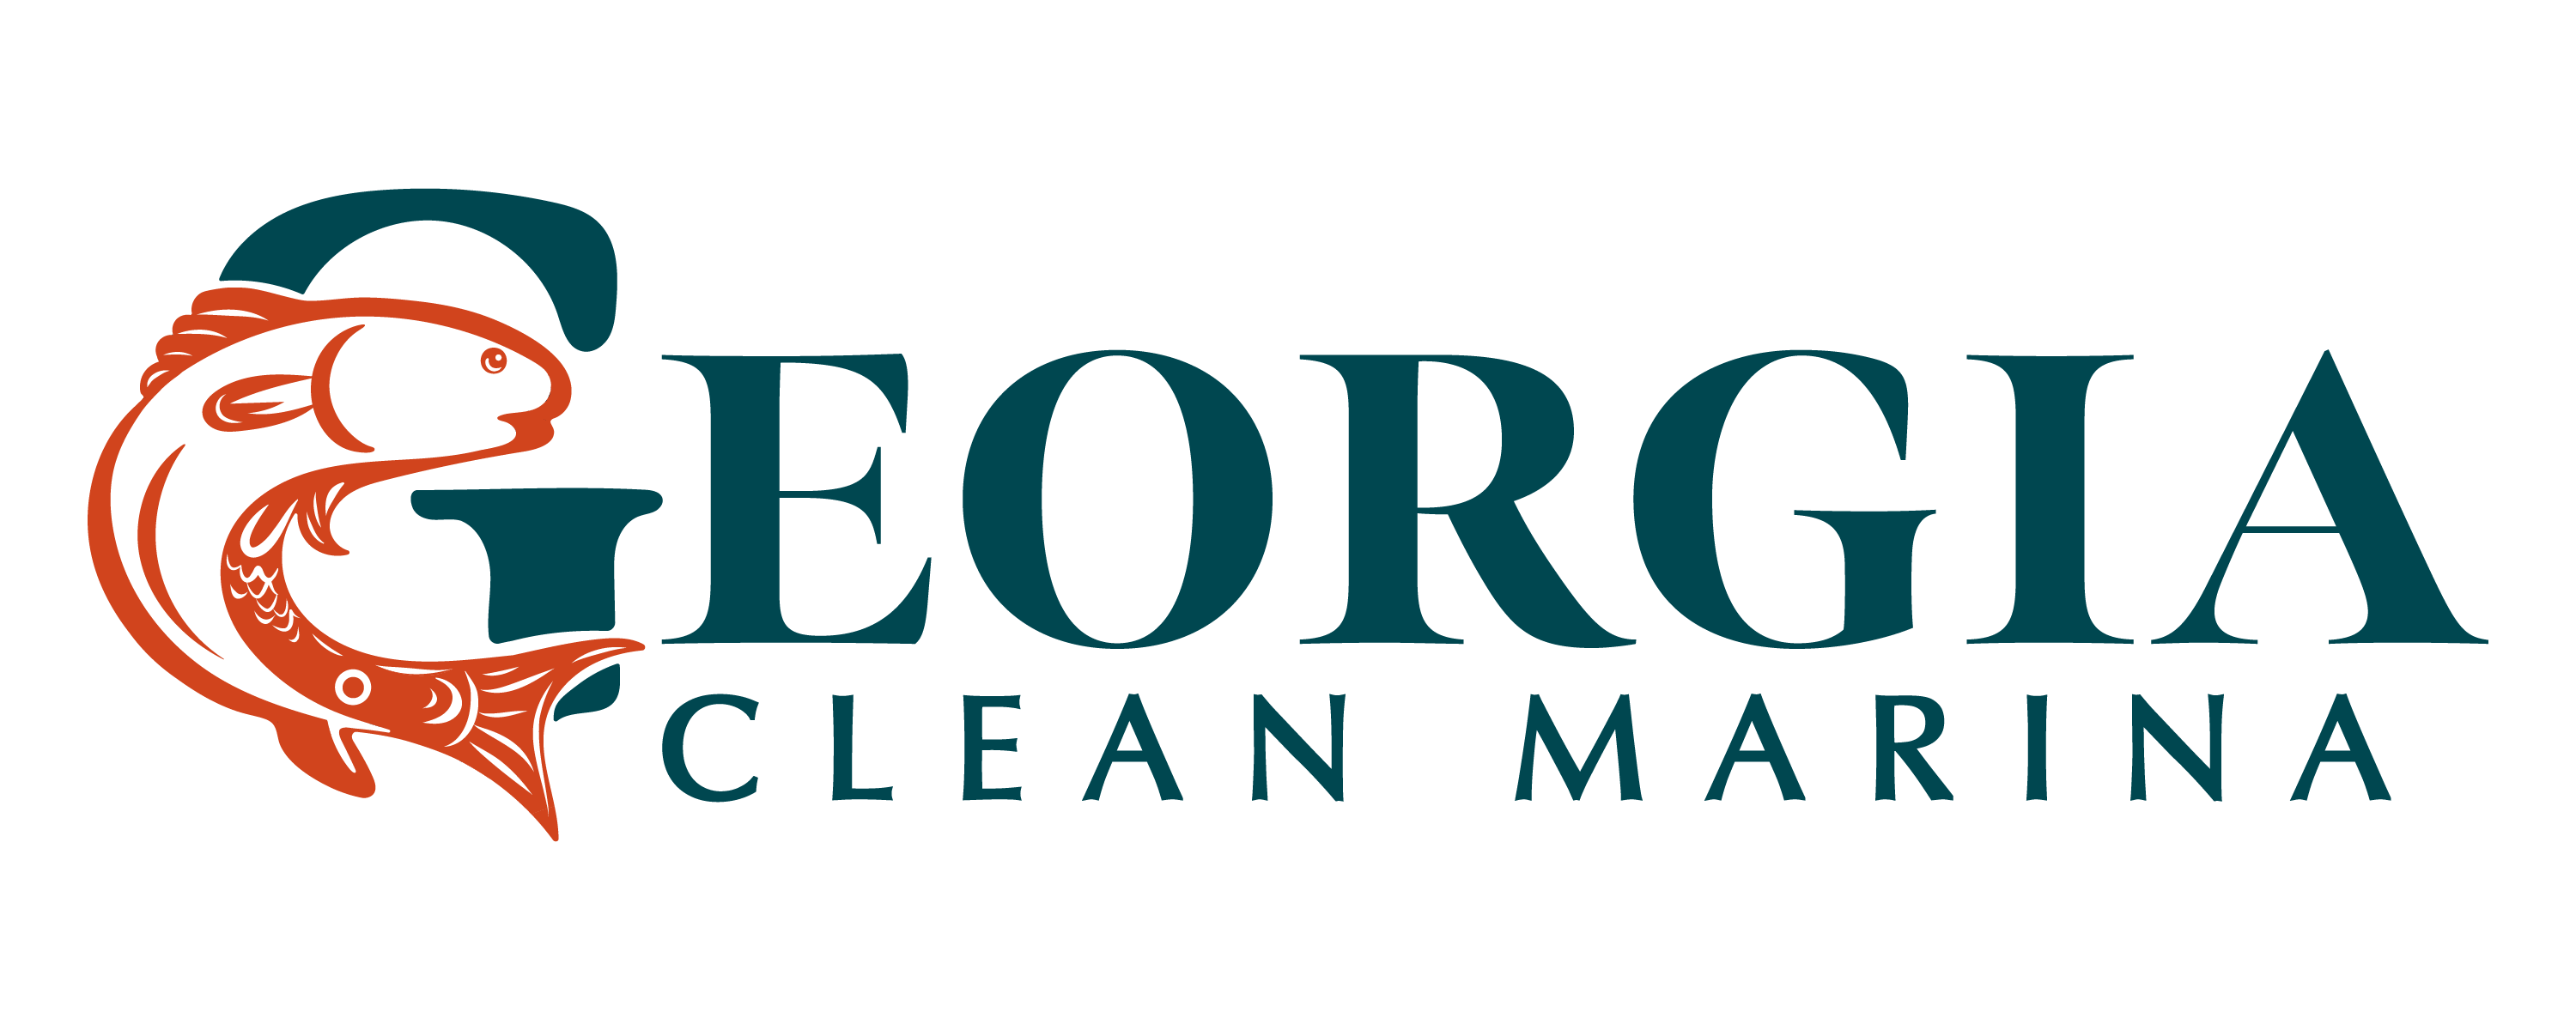 Georgia Clean Marina logo